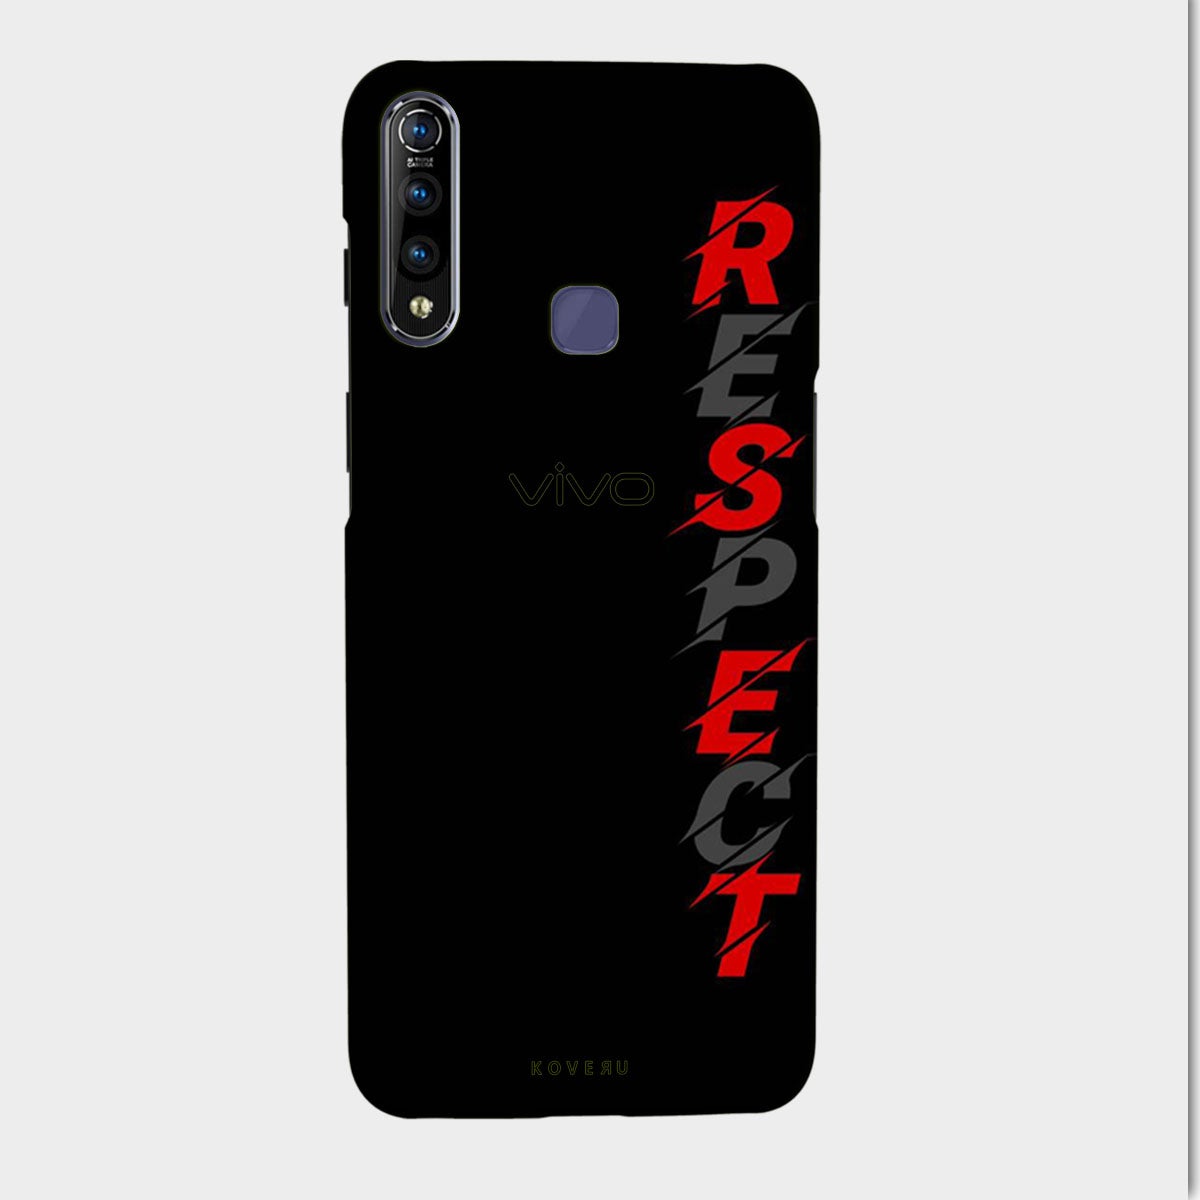 Respect - Mobile Phone Cover - Hard Case - Vivo